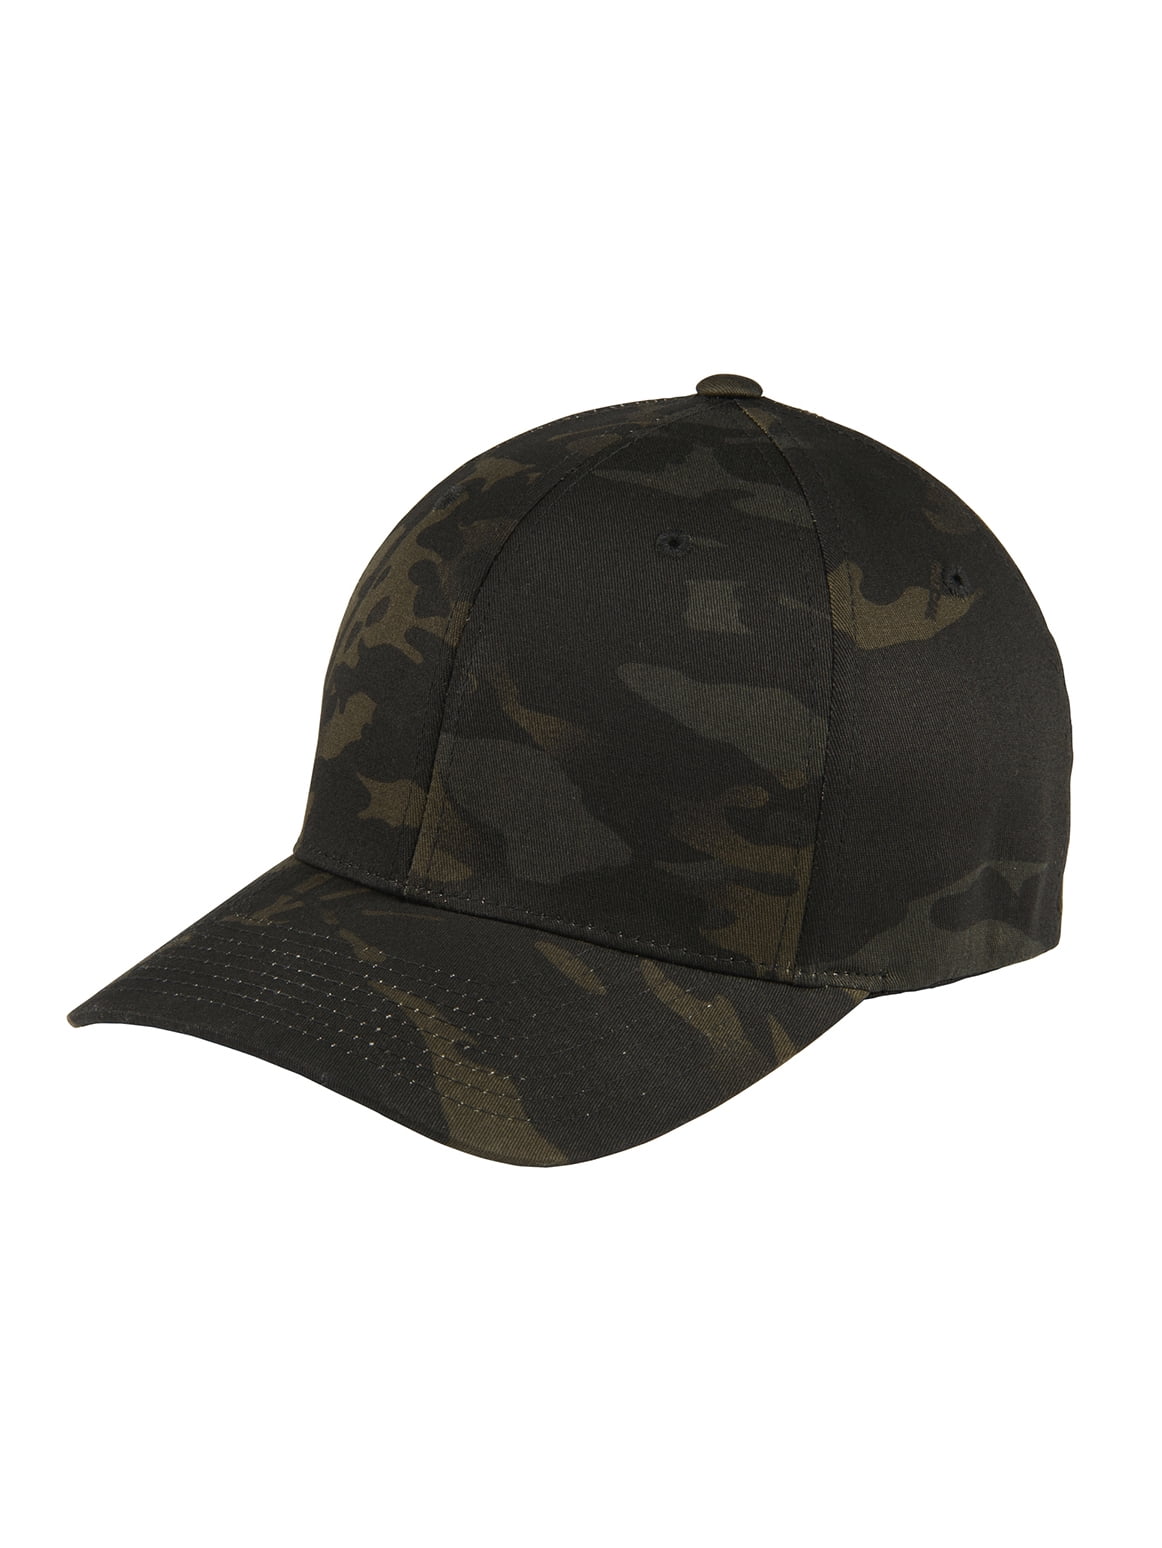 - Large/X-Large Cap Fit Headwear Top Flex Olive Baseball Drab/Green -